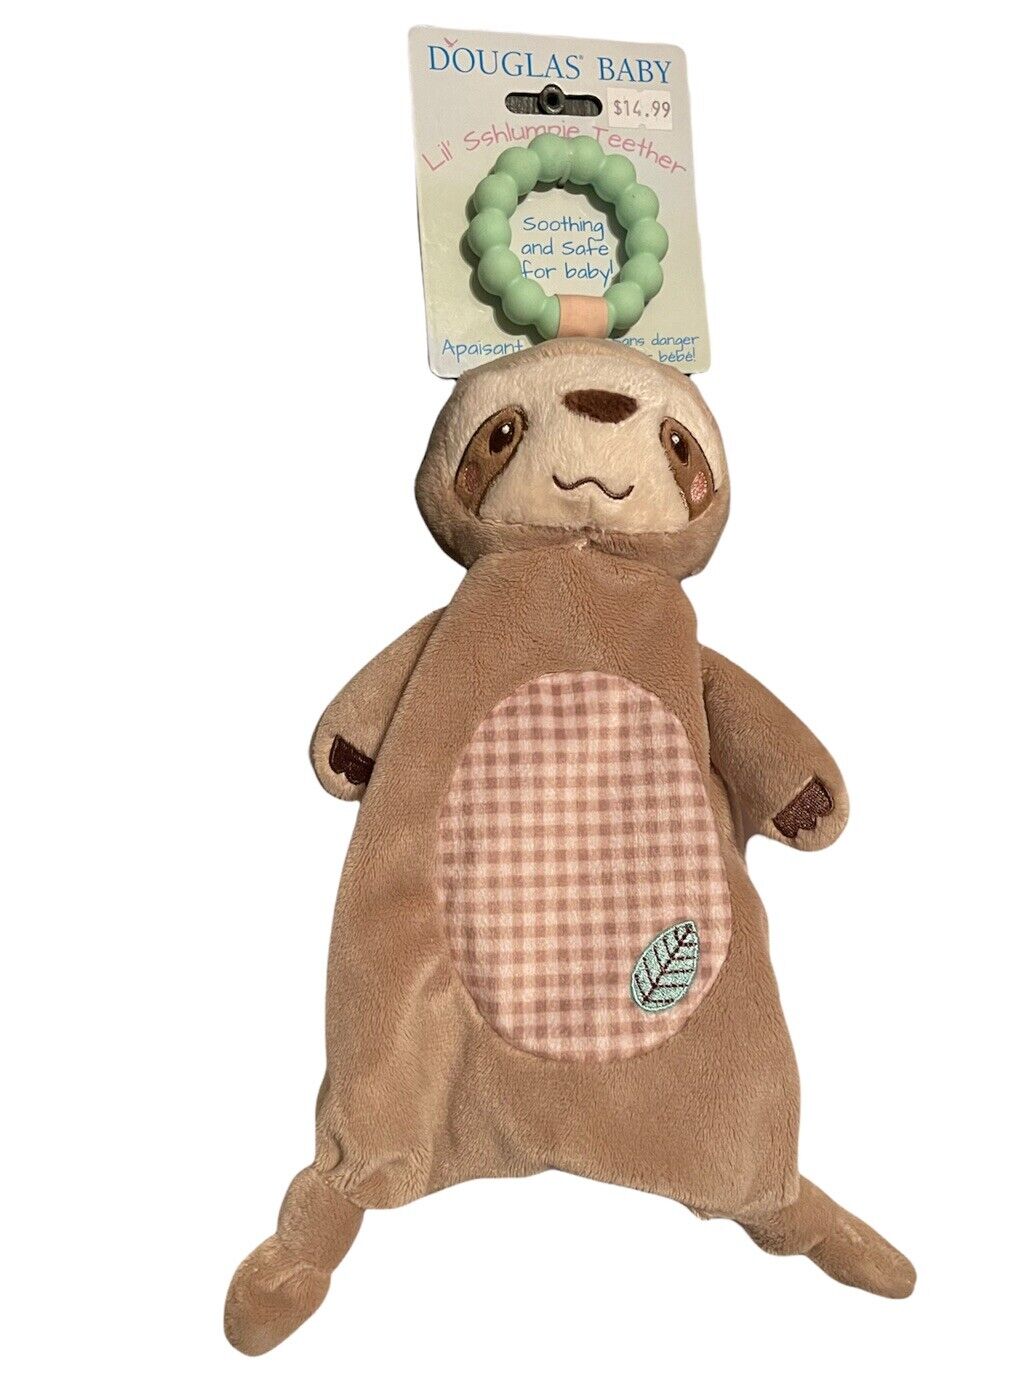 Baby Stanley Sloth Plush Teether Stuffed Animal Douglas Cuddle Toys Sshlumpie